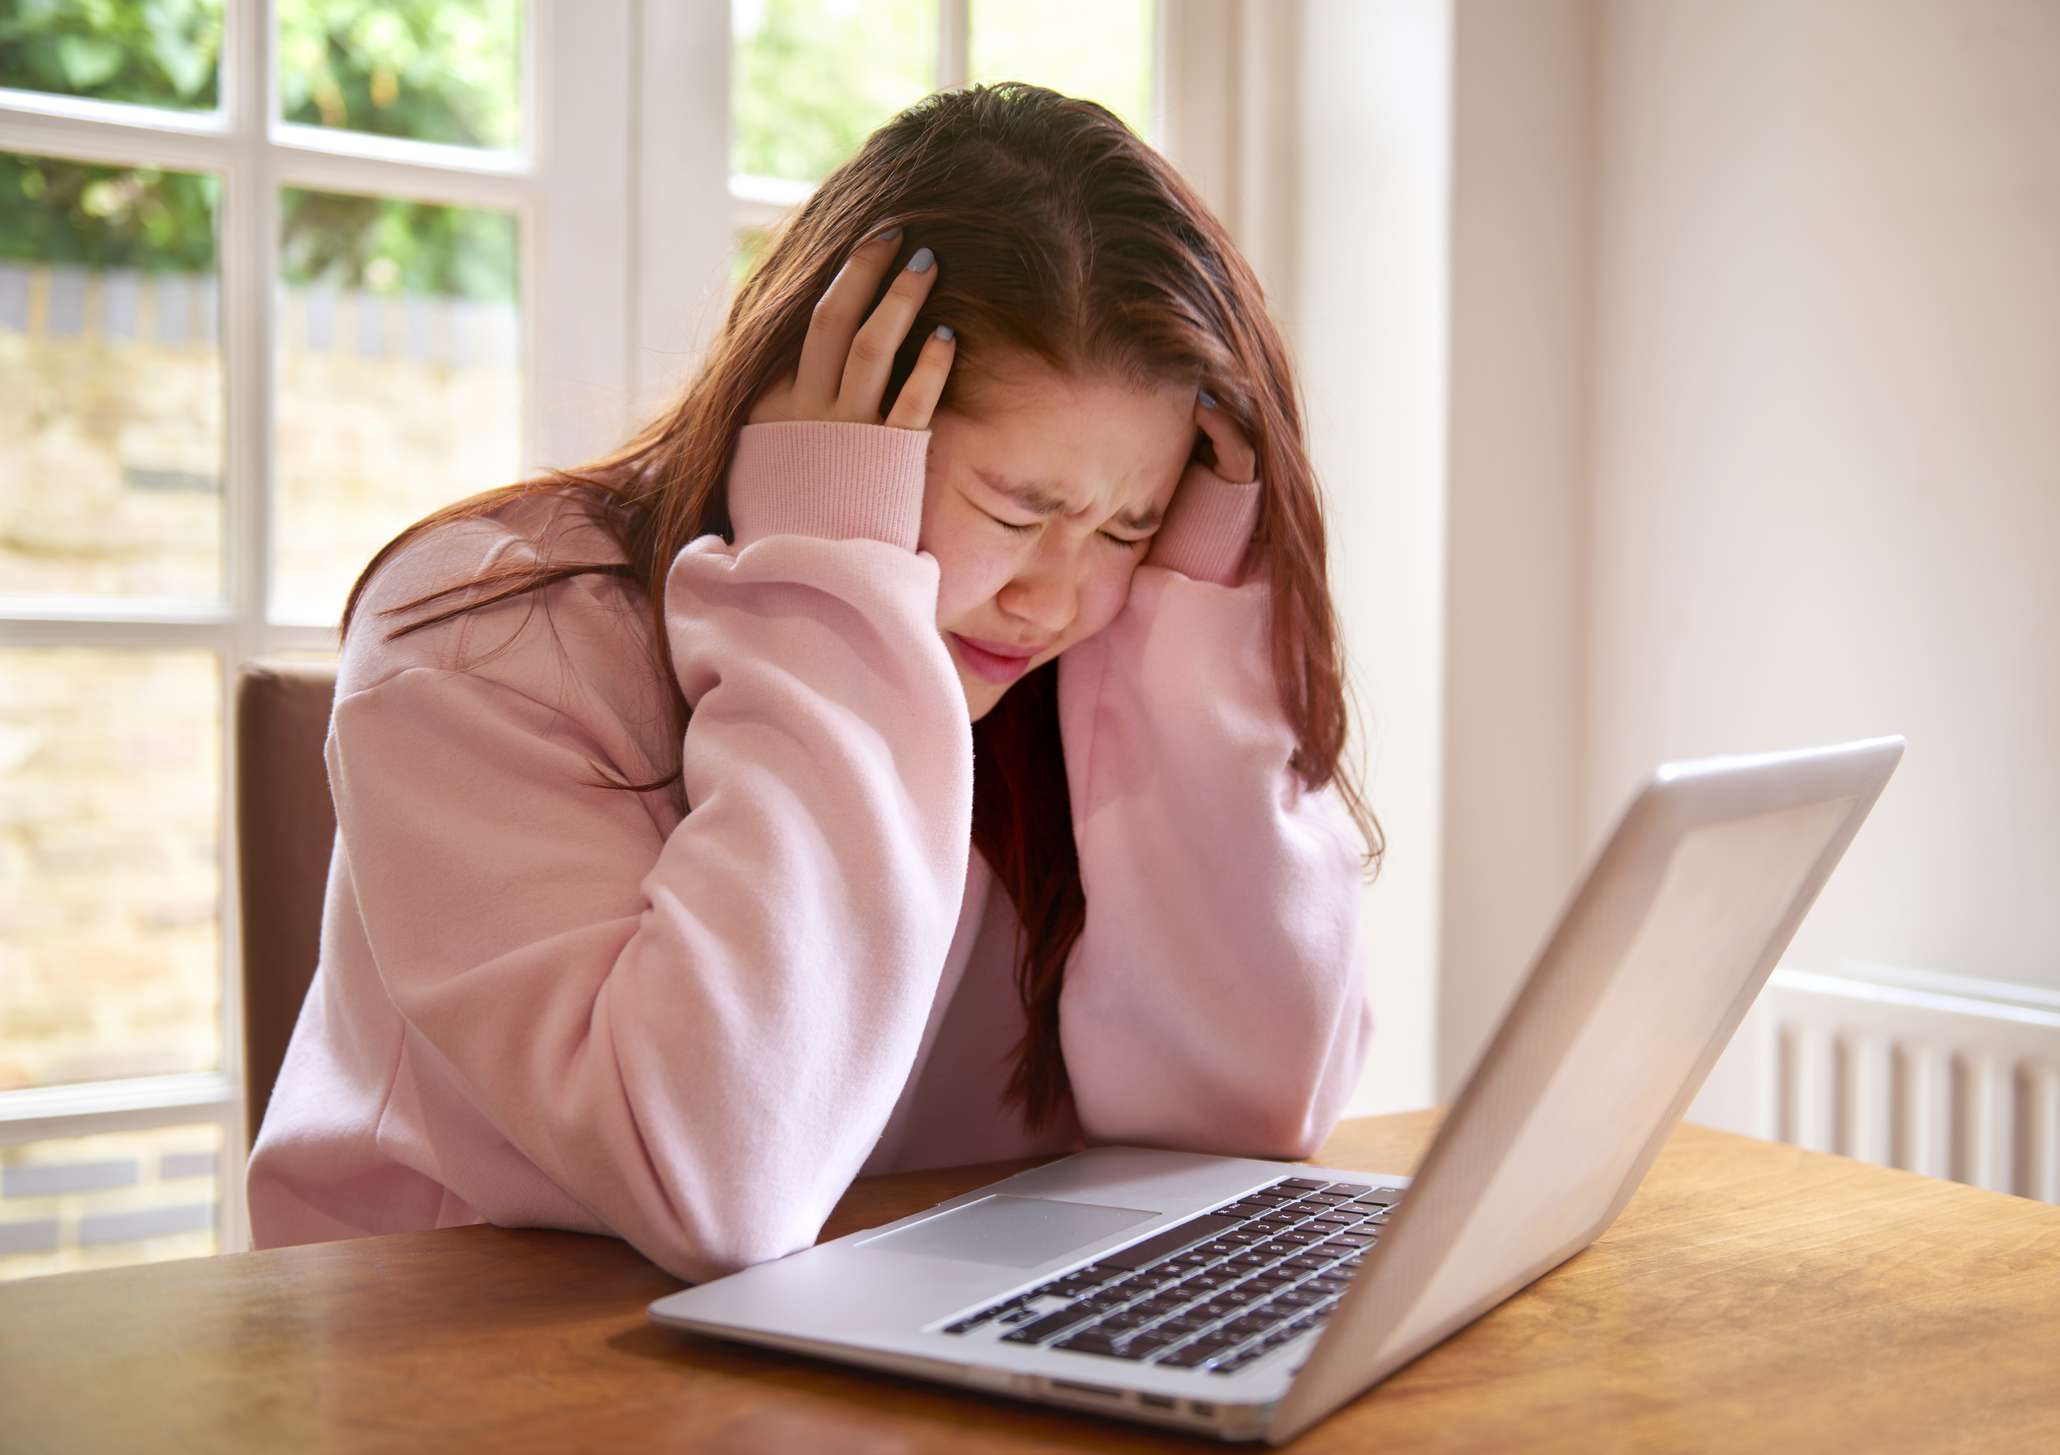 Teenager crying using laptop - stock photo